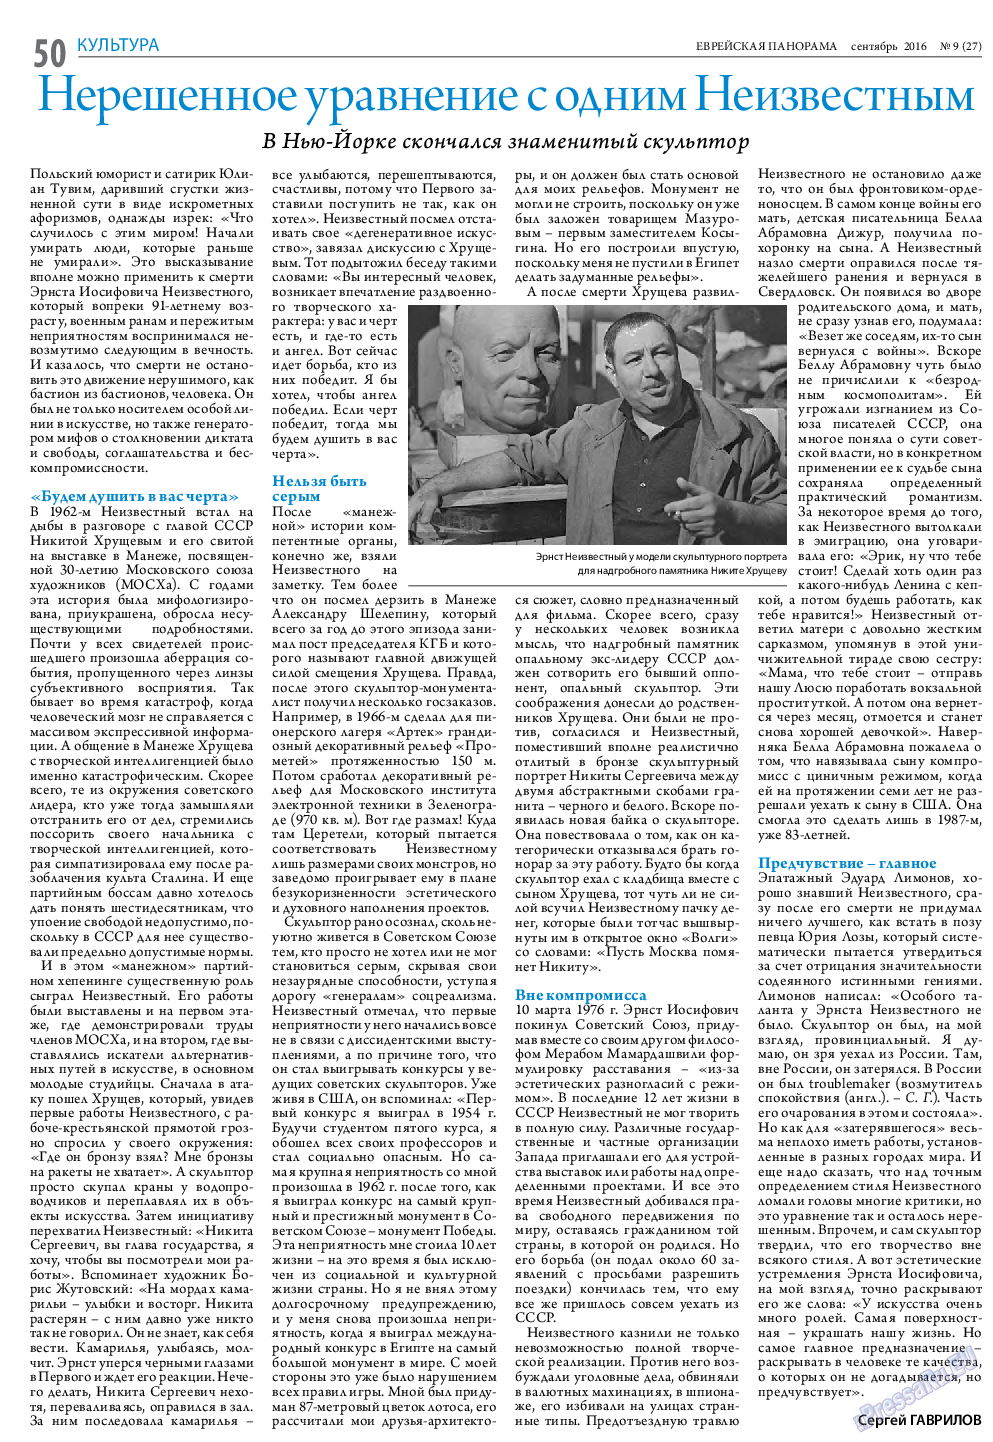 Еврейская панорама, газета. 2016 №9 стр.50